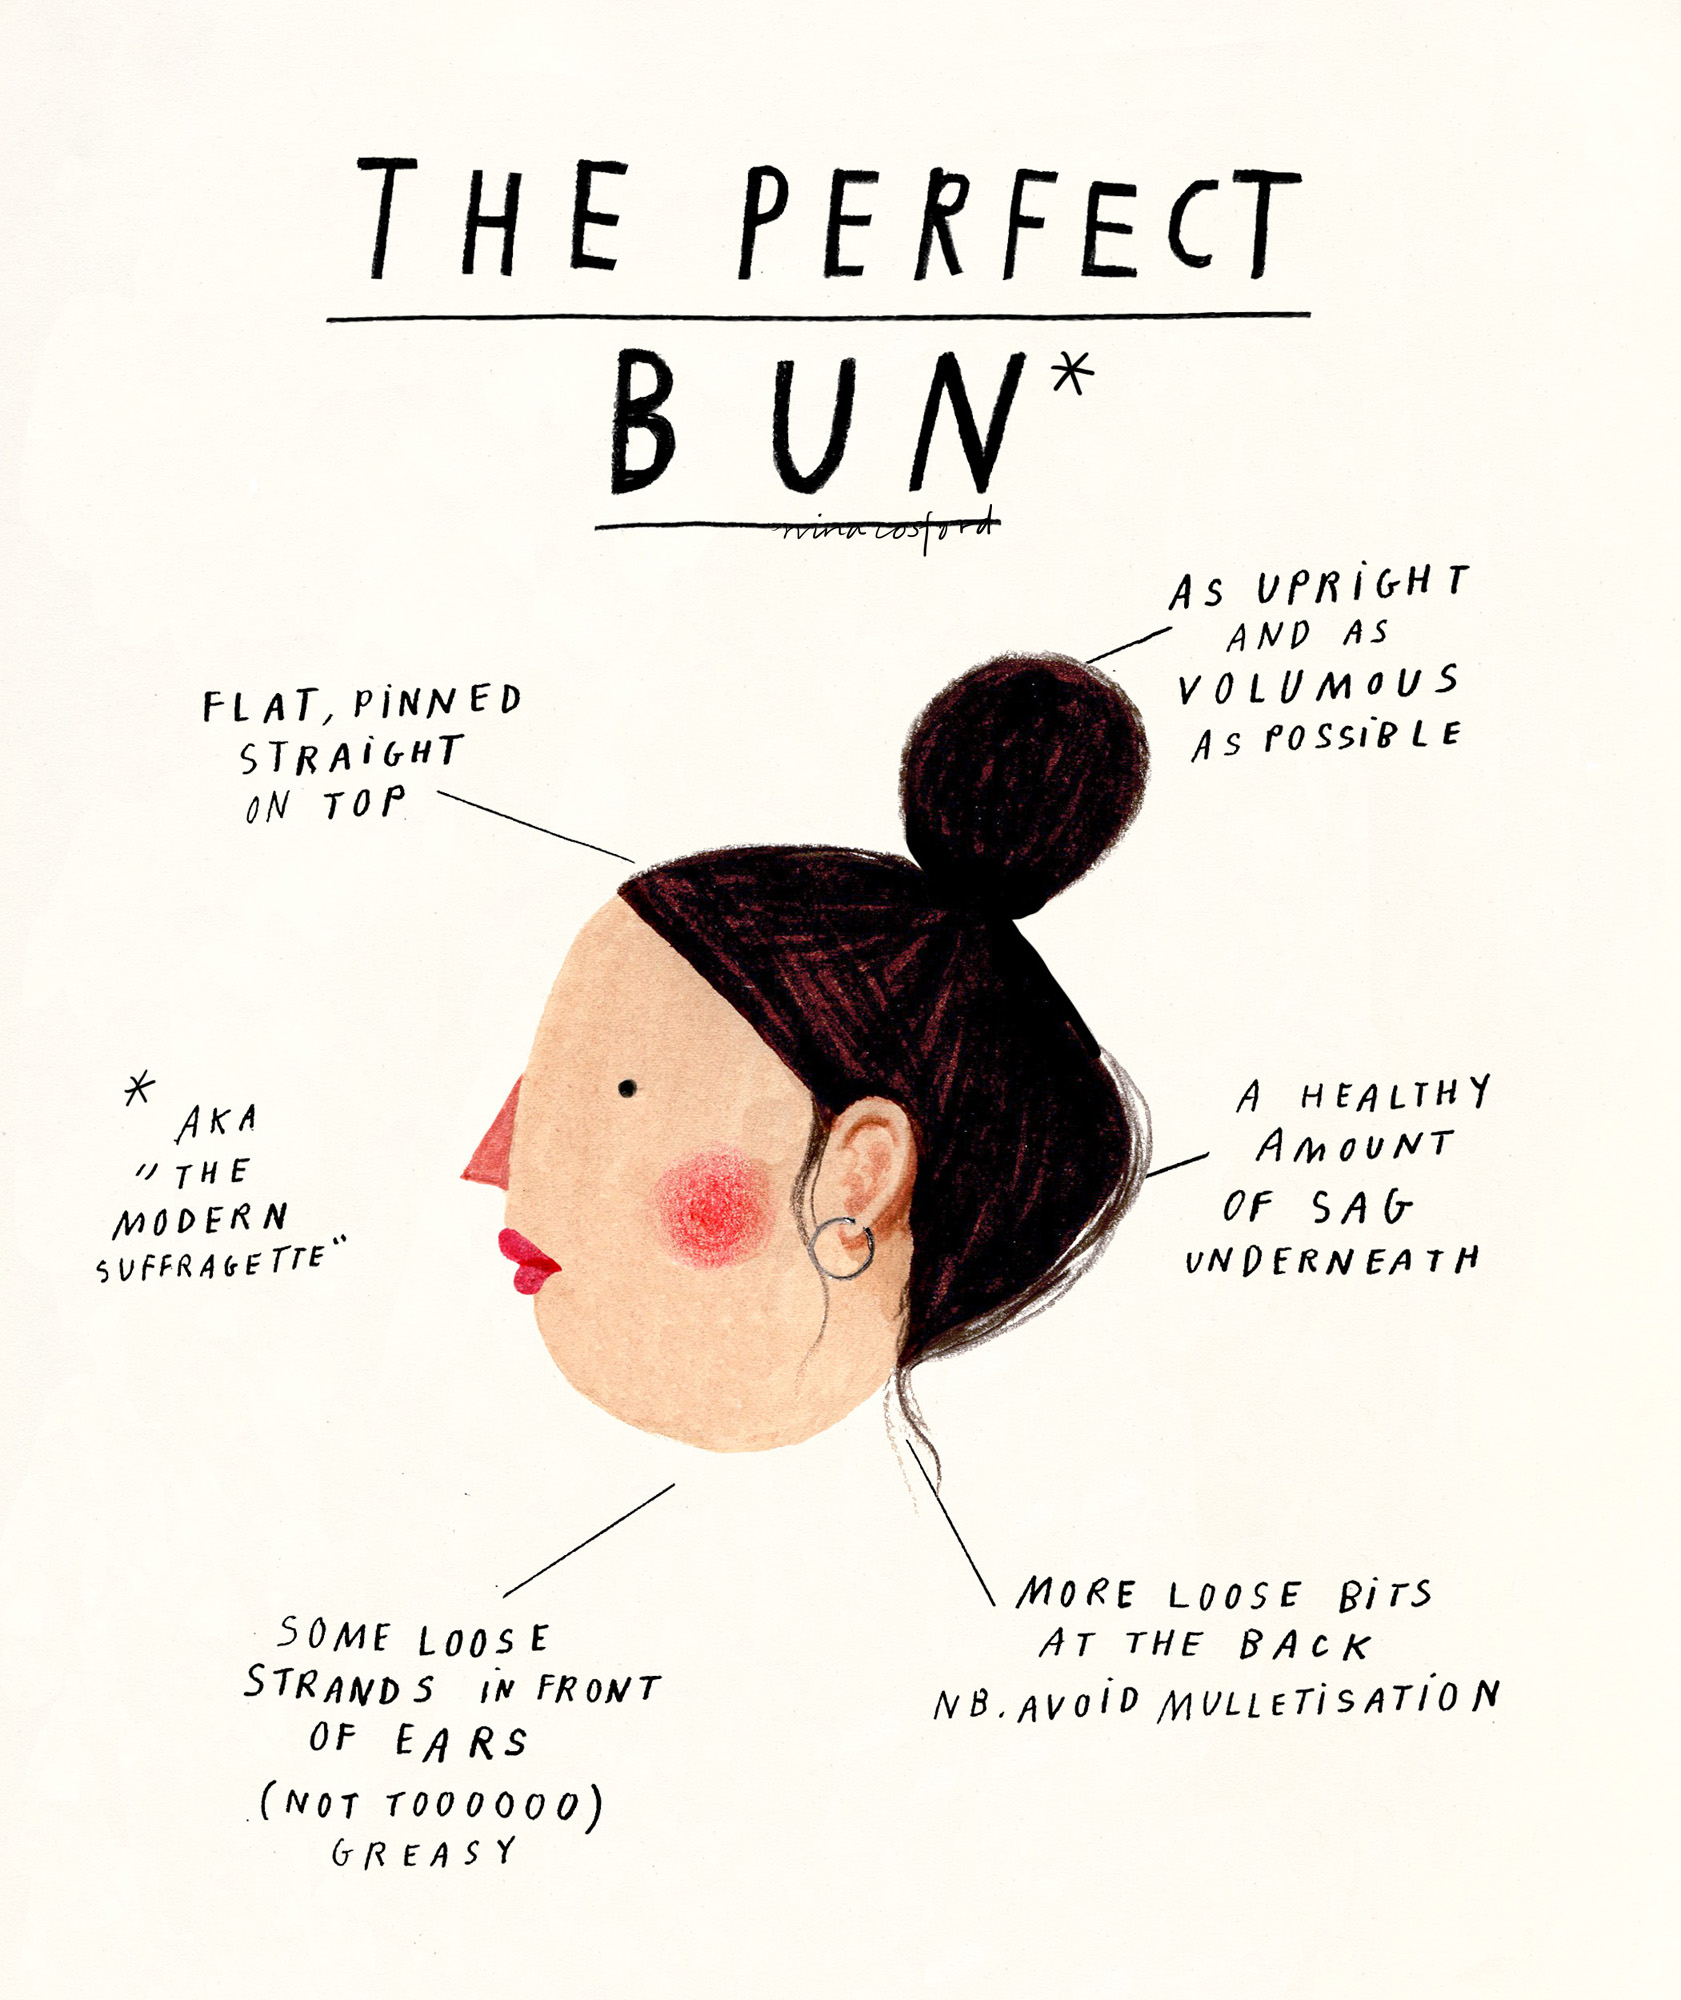 Nina Cosford Illustration - the perfect bun